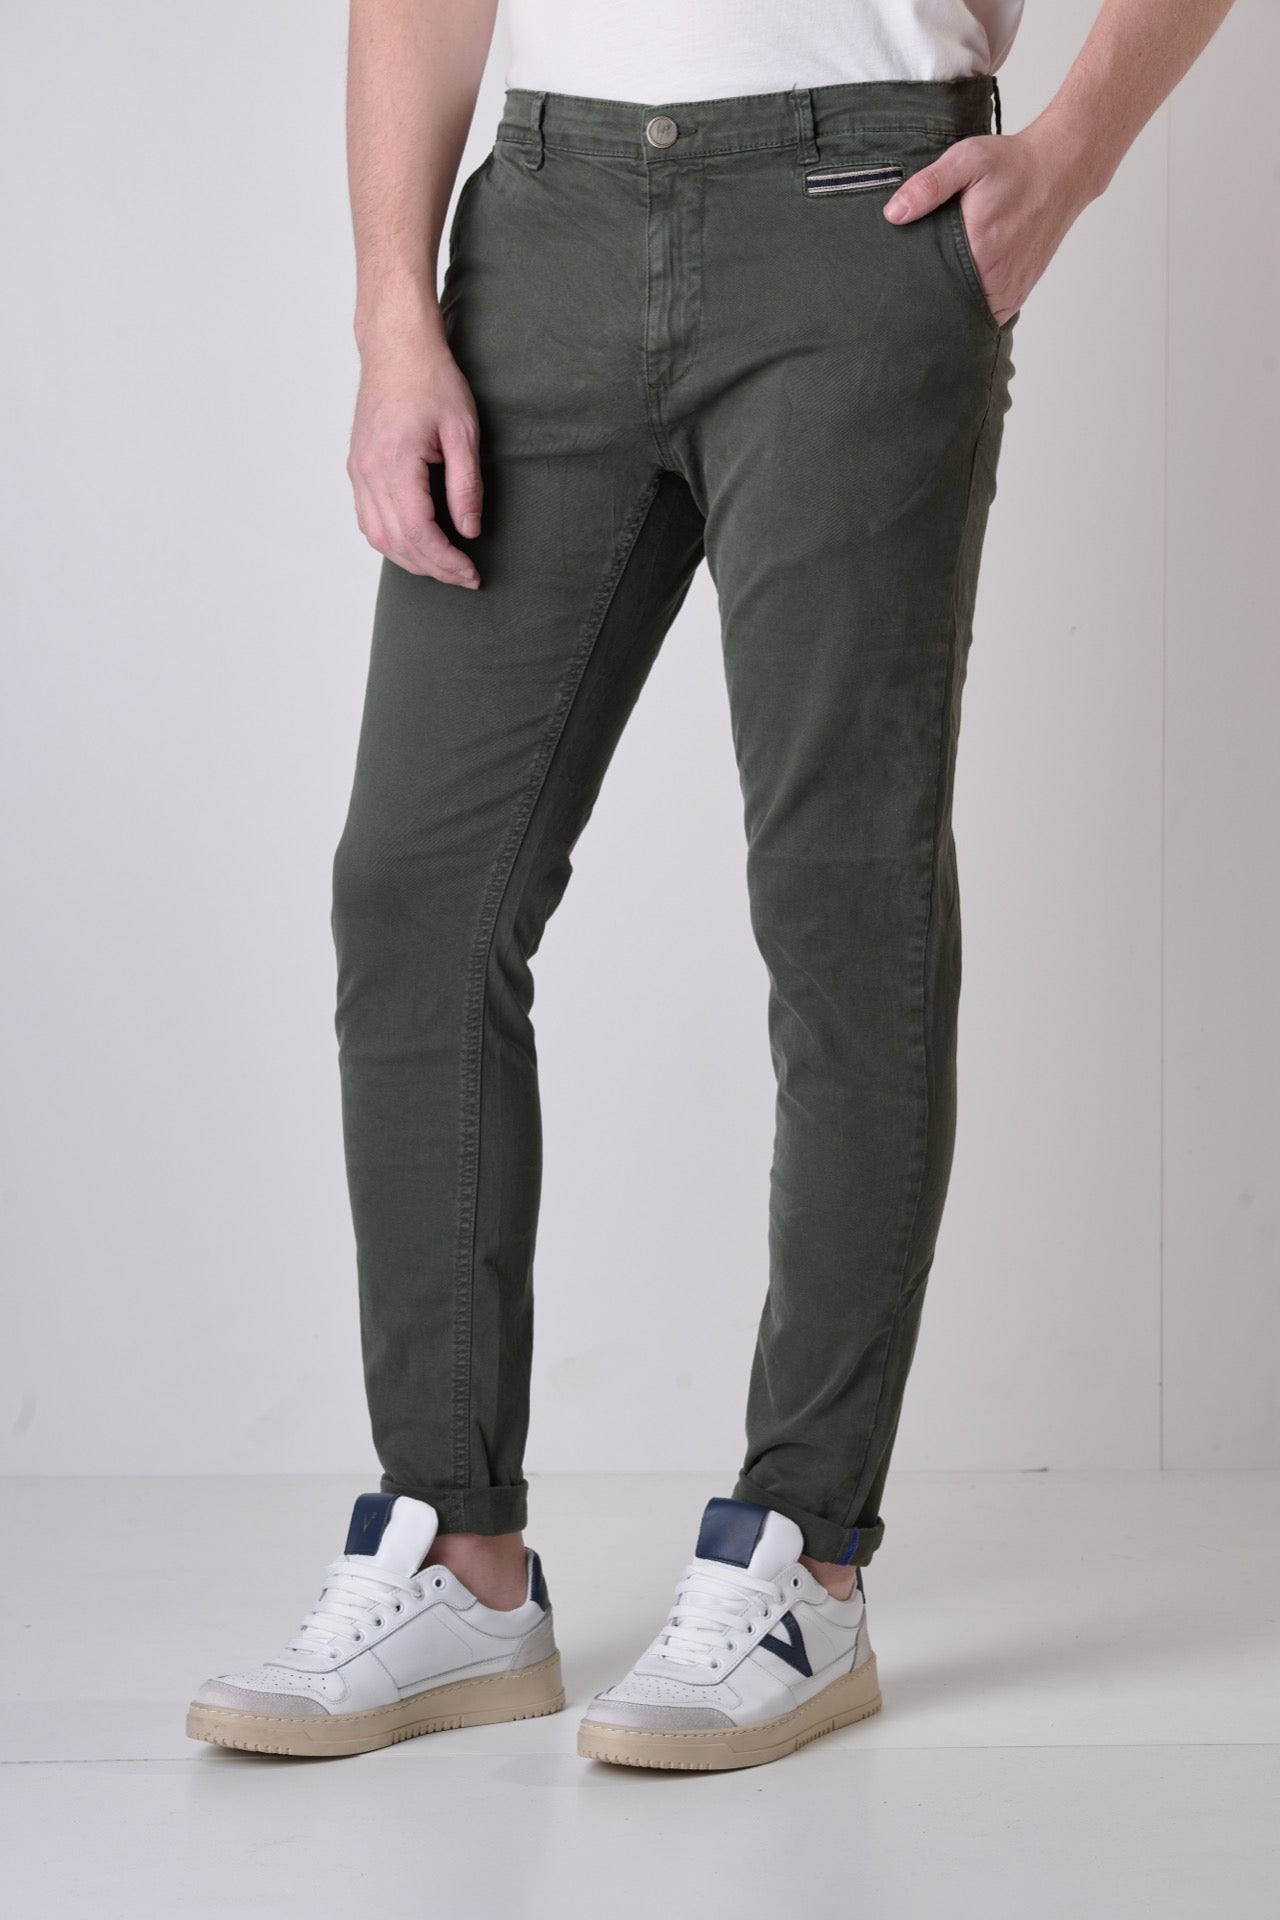 ROMA - Pantalone Chino Verde Militare